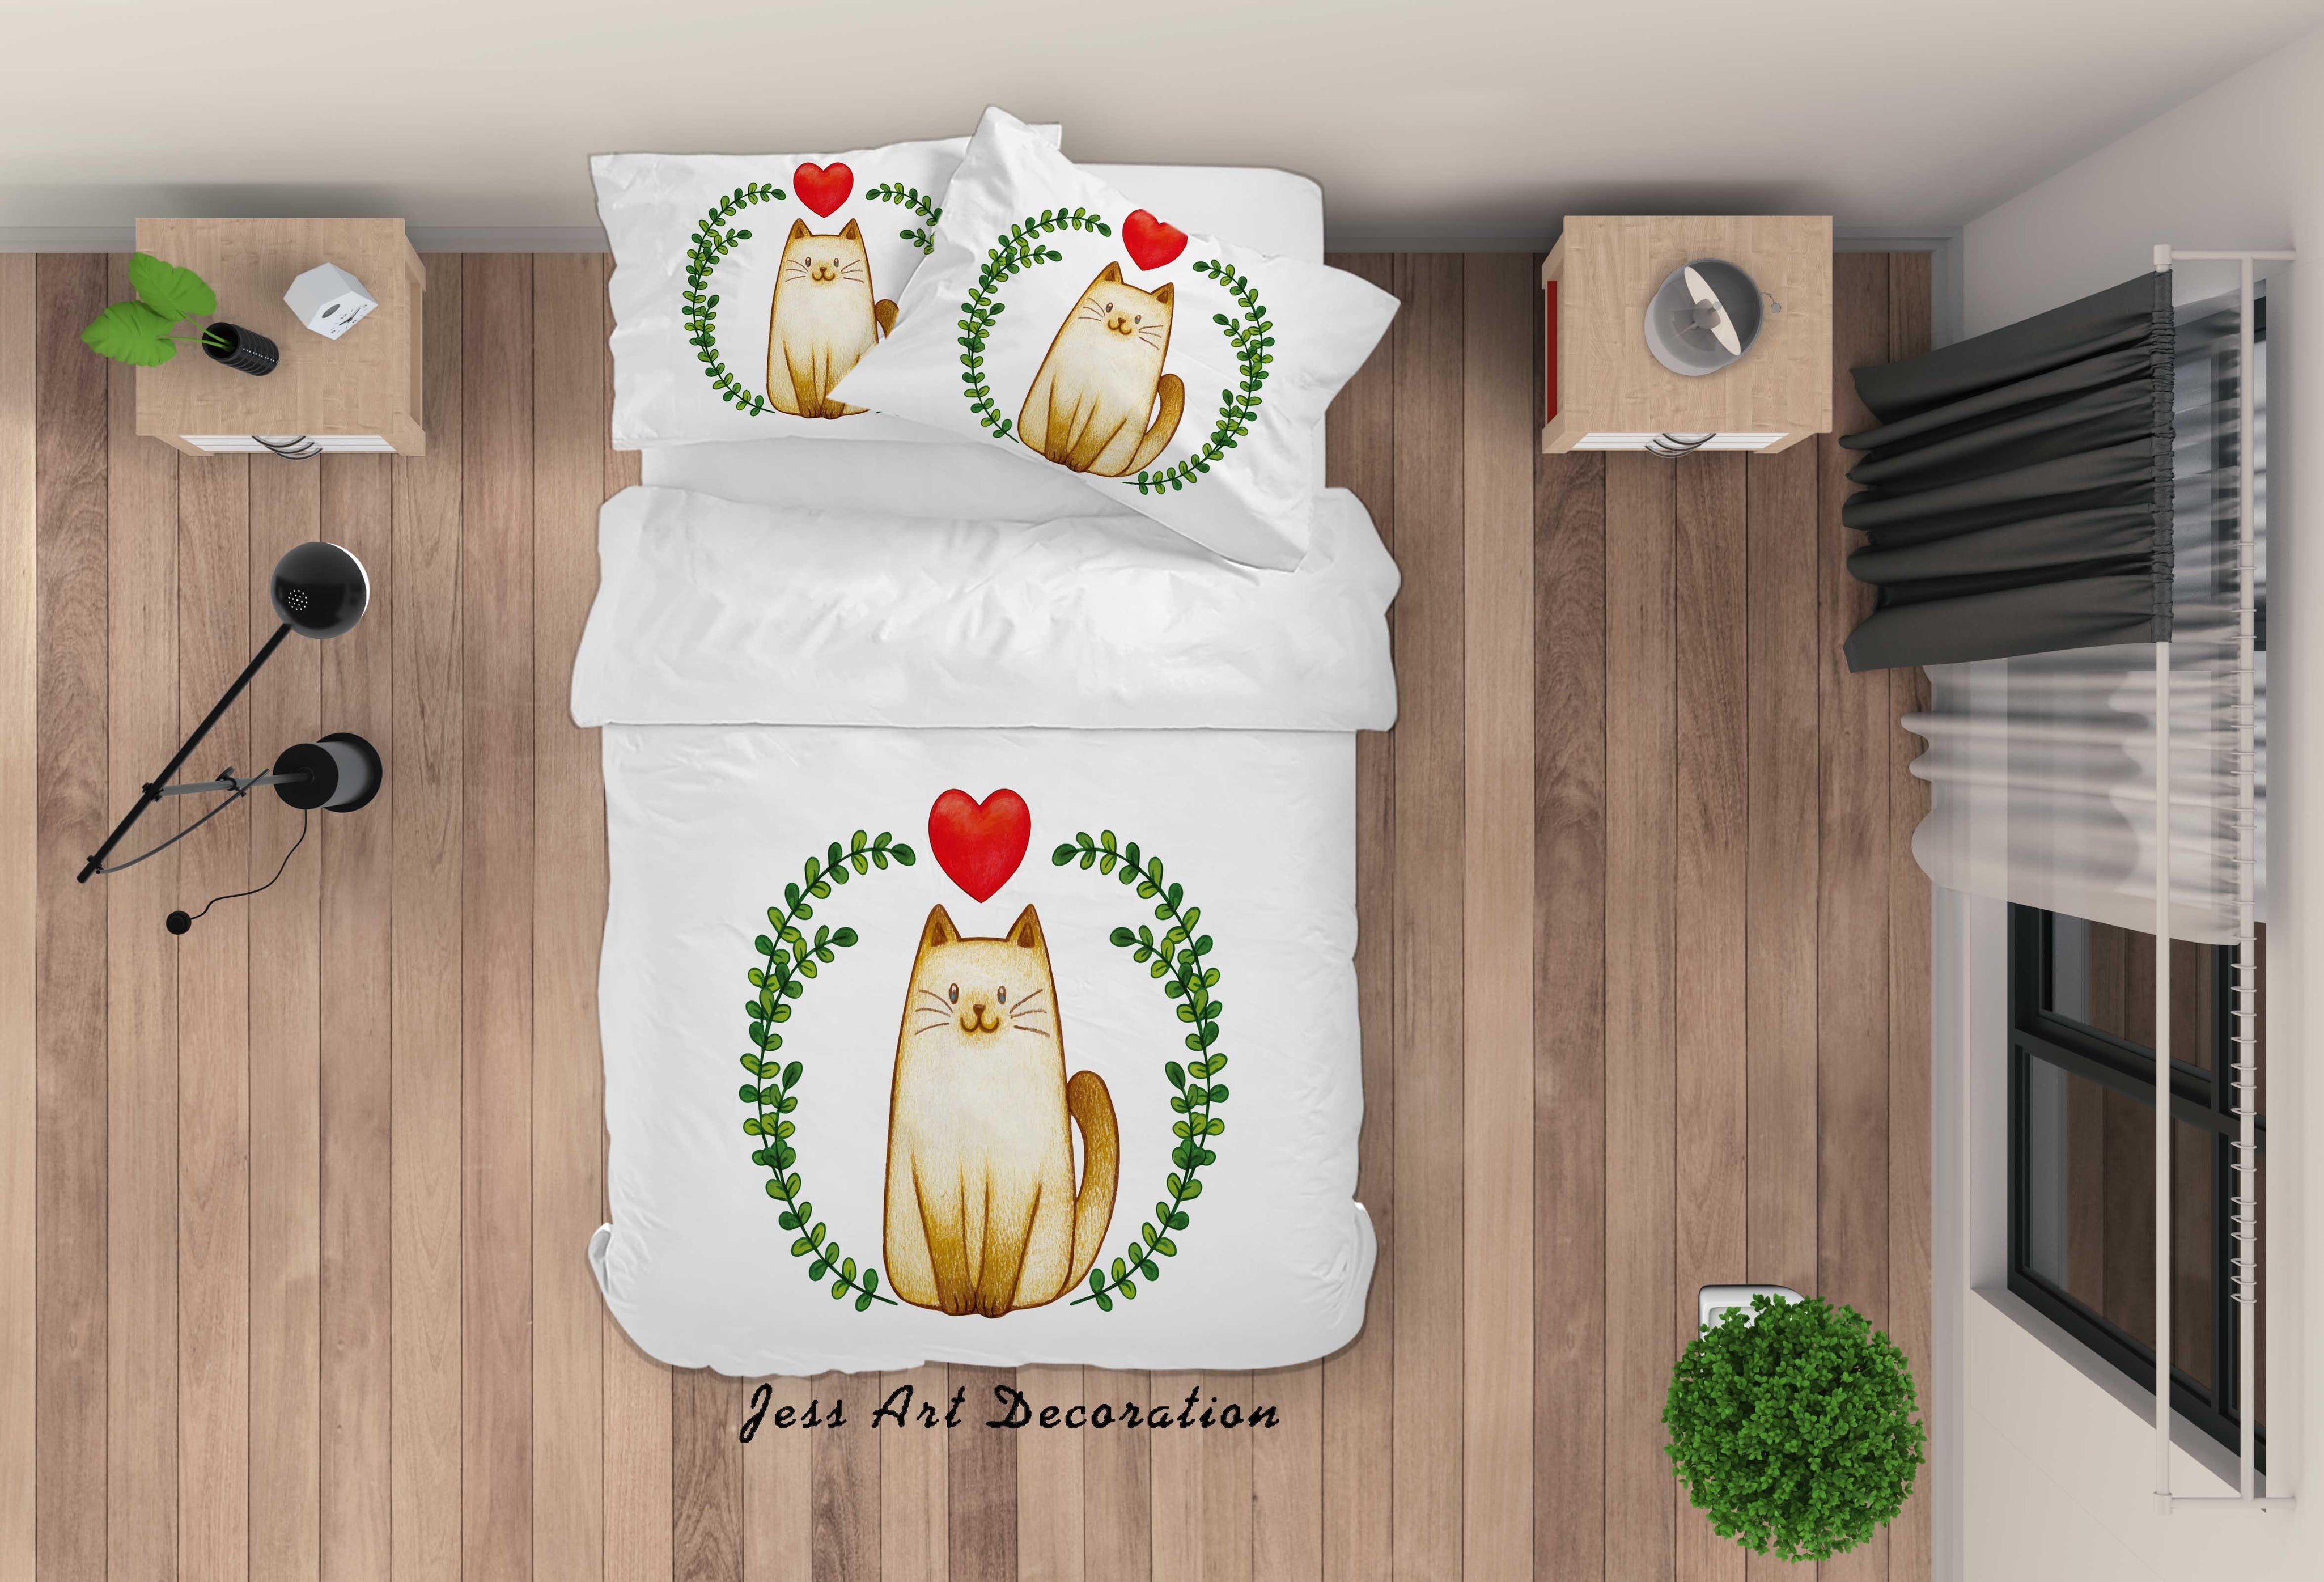 3D White Cat Heart Leaves Quilt Cover Set Bedding Set Duvet Cover Pillowcases SF33- Jess Art Decoration